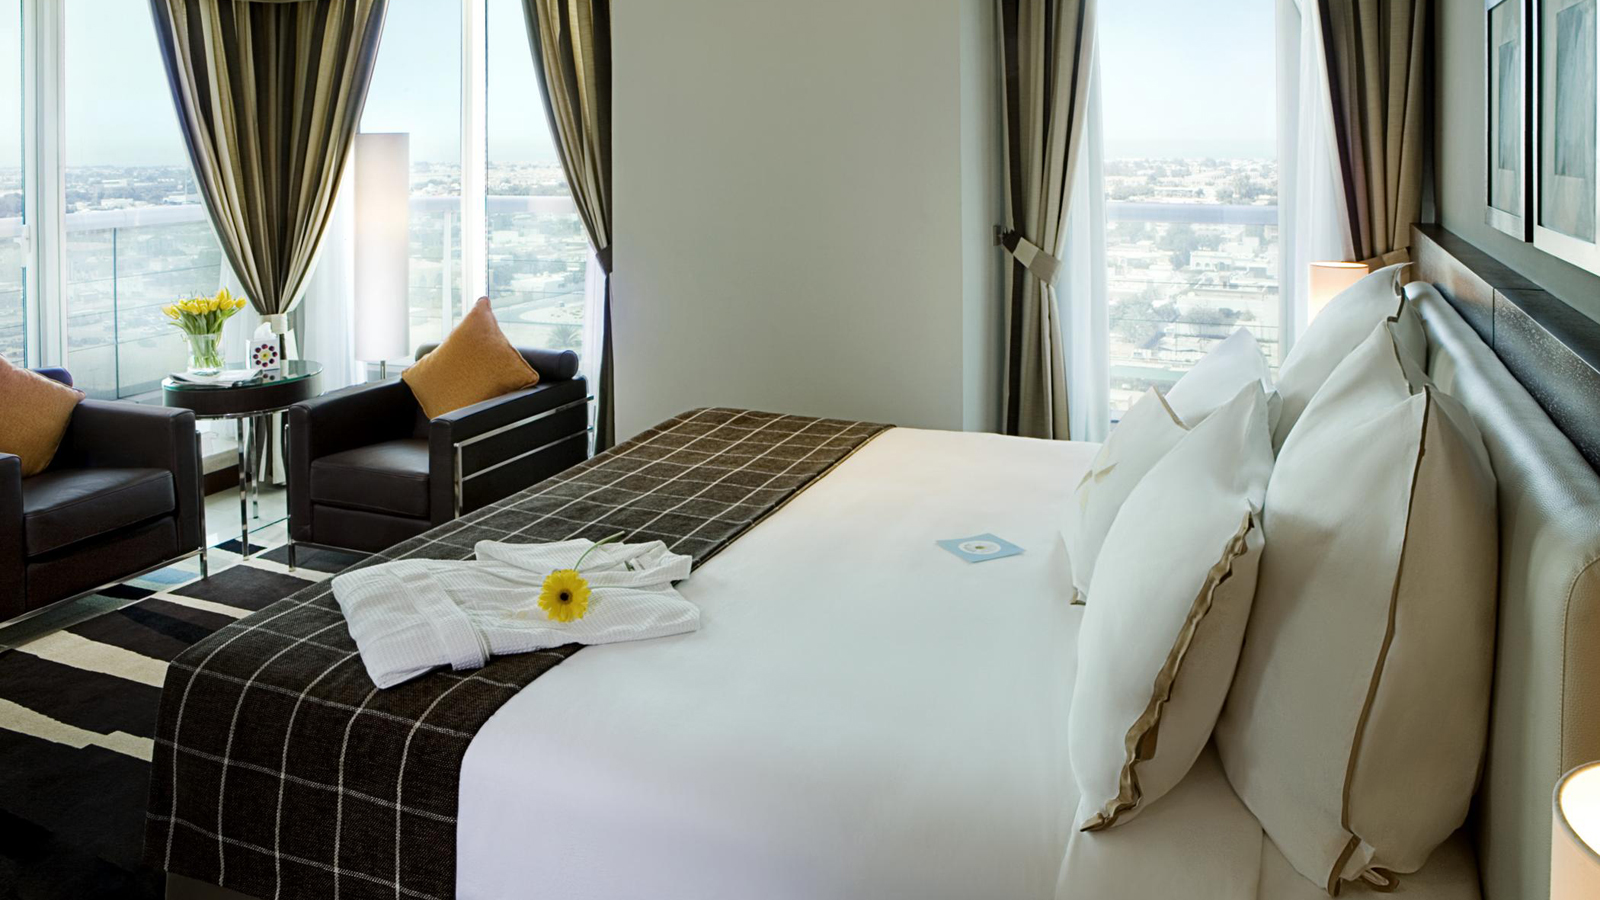 تور دبی هتل فور پوینت - آژانس مسافرتی و هواپیمایی آفتاب ساحل آبی